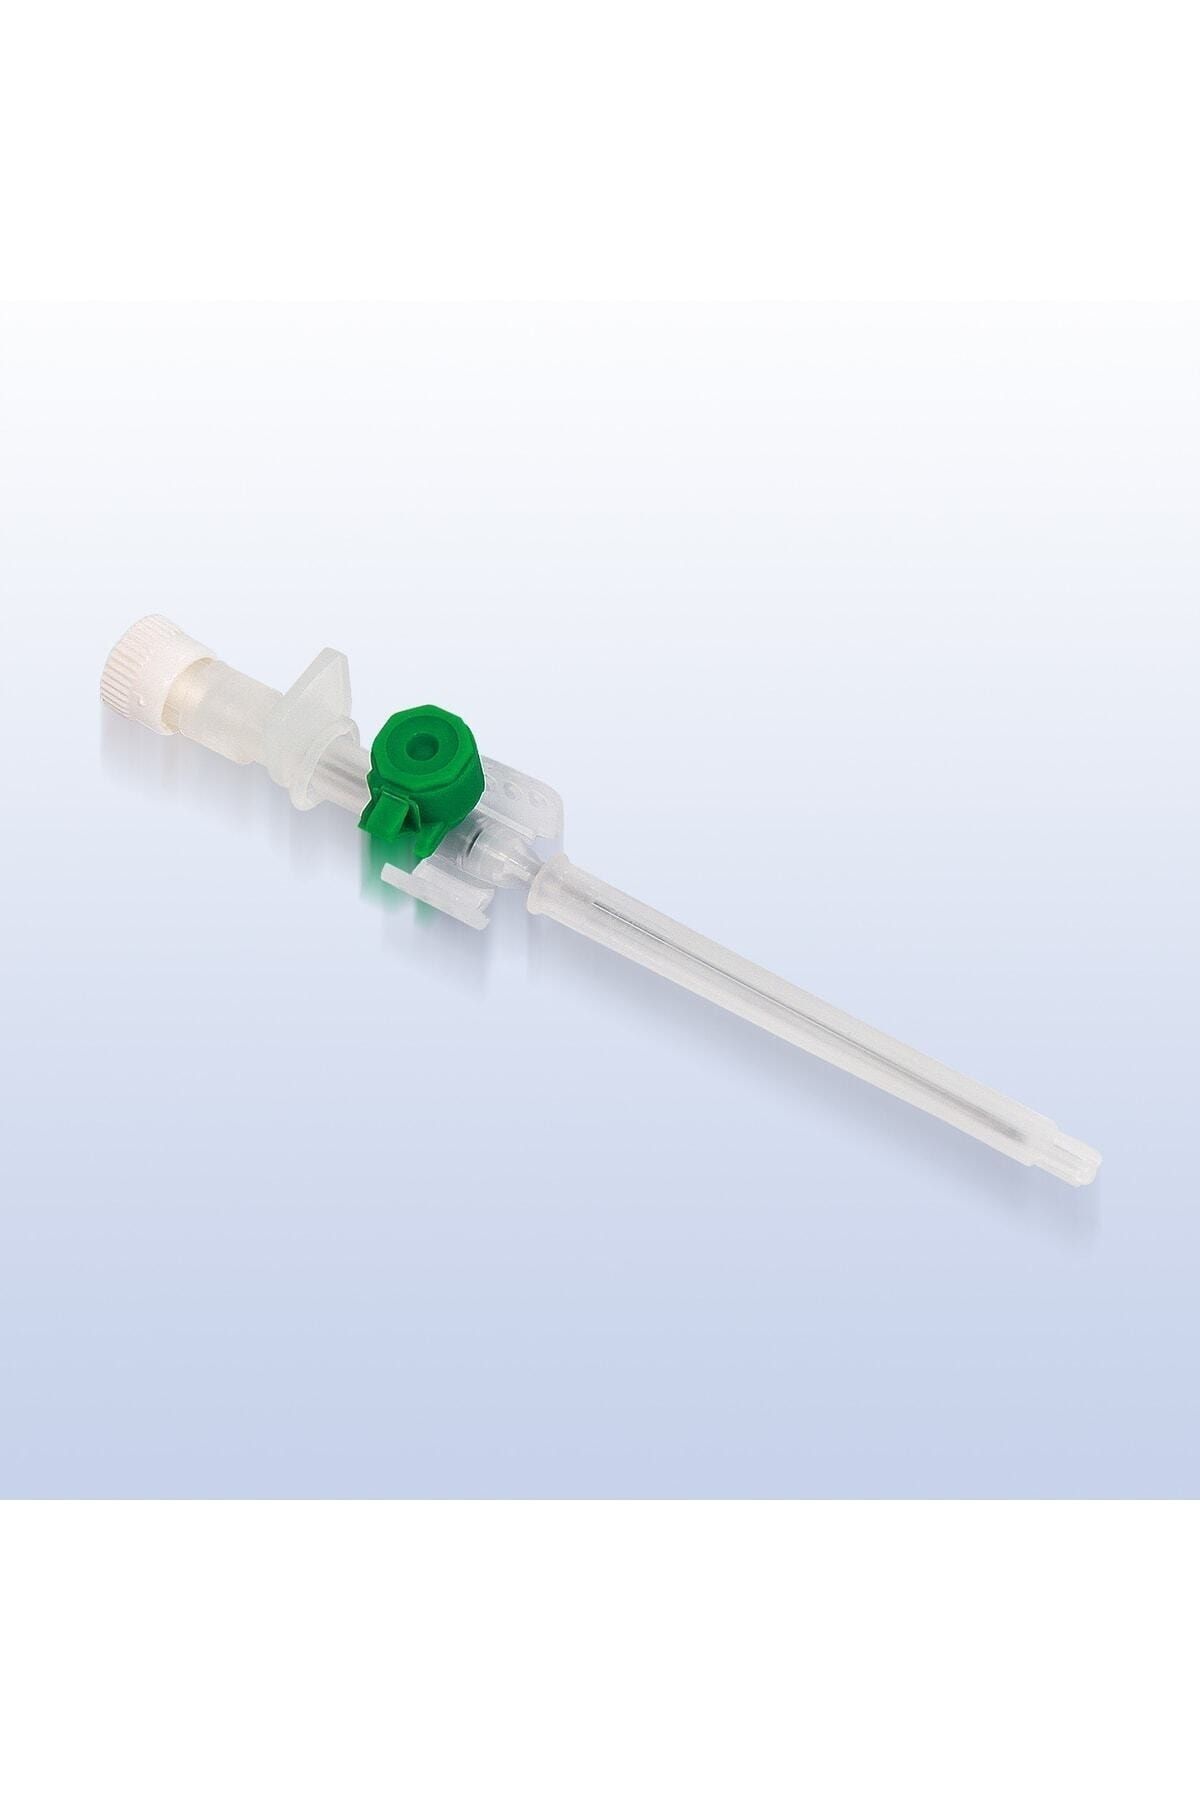 Ayset Steril Piercing Delim Iğnesi - 100 Adet 45mm Yeşil Brk0195